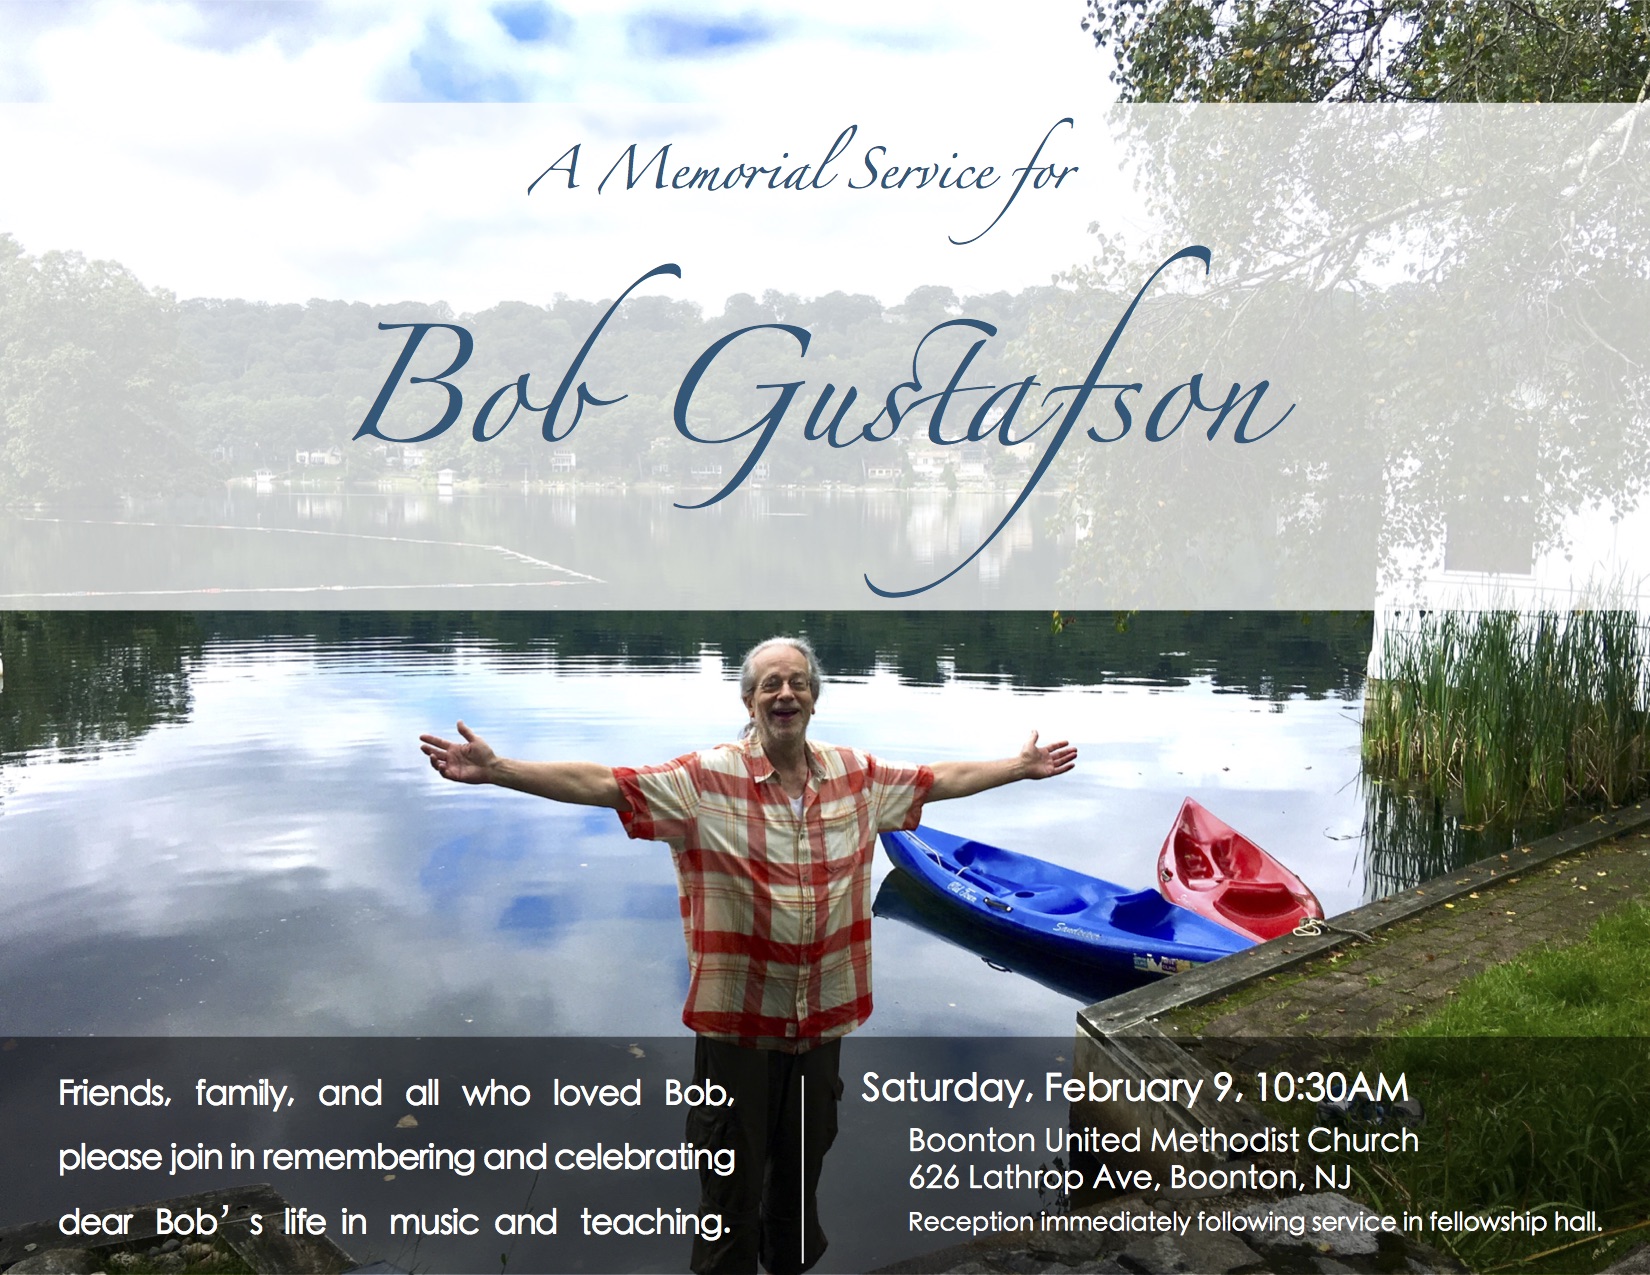 Memorial Service for Bob Gustafson @ Boonton United Methodist Church